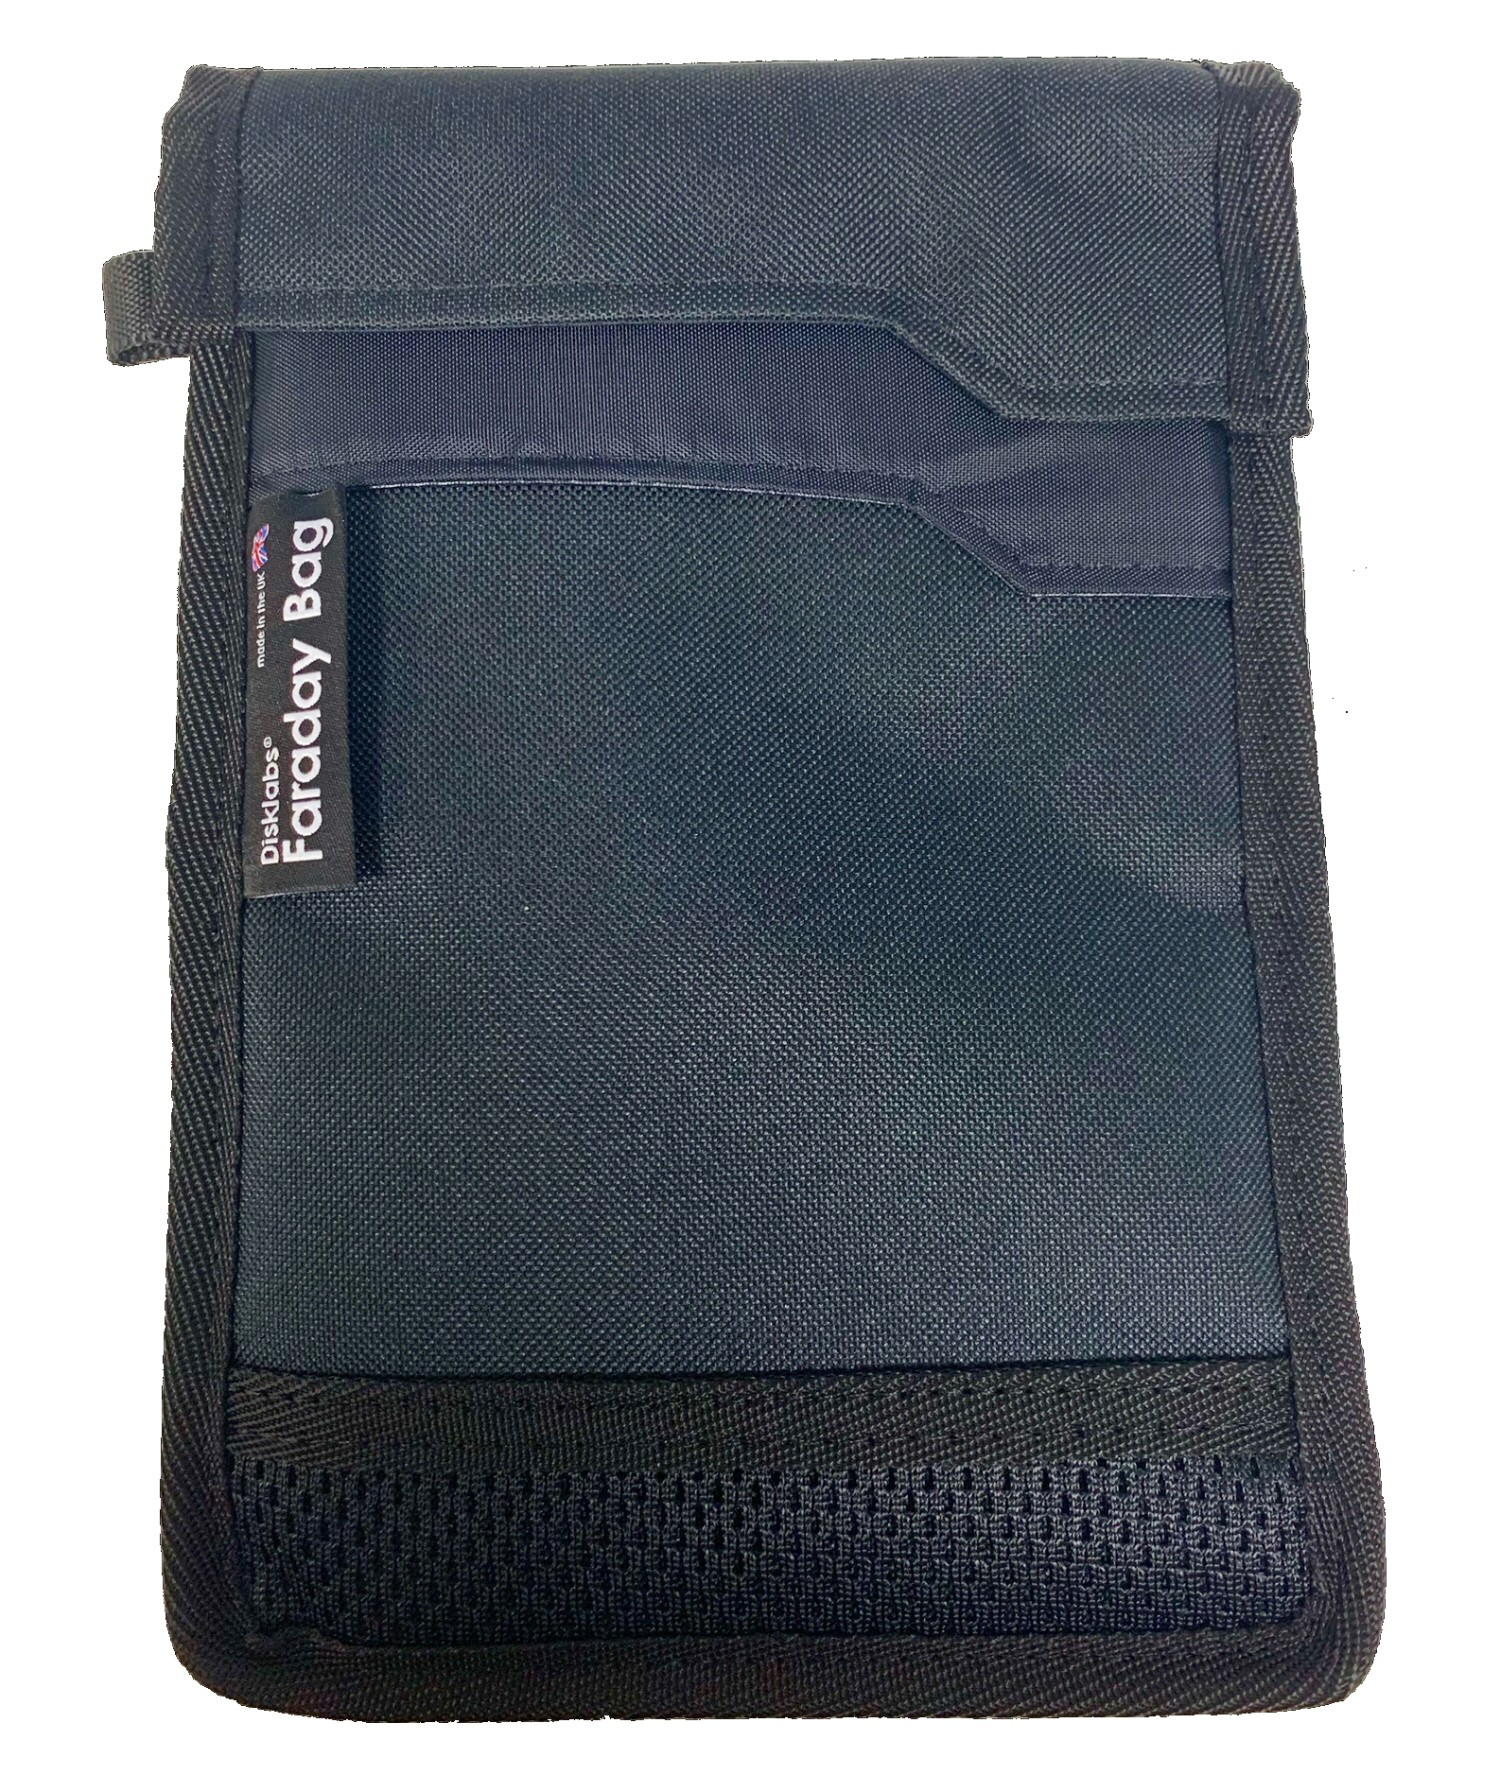 Disklabs Key Shield Home (KSH / KS3) Larger RF Shielding Faraday Bag For Multiple Car Keys